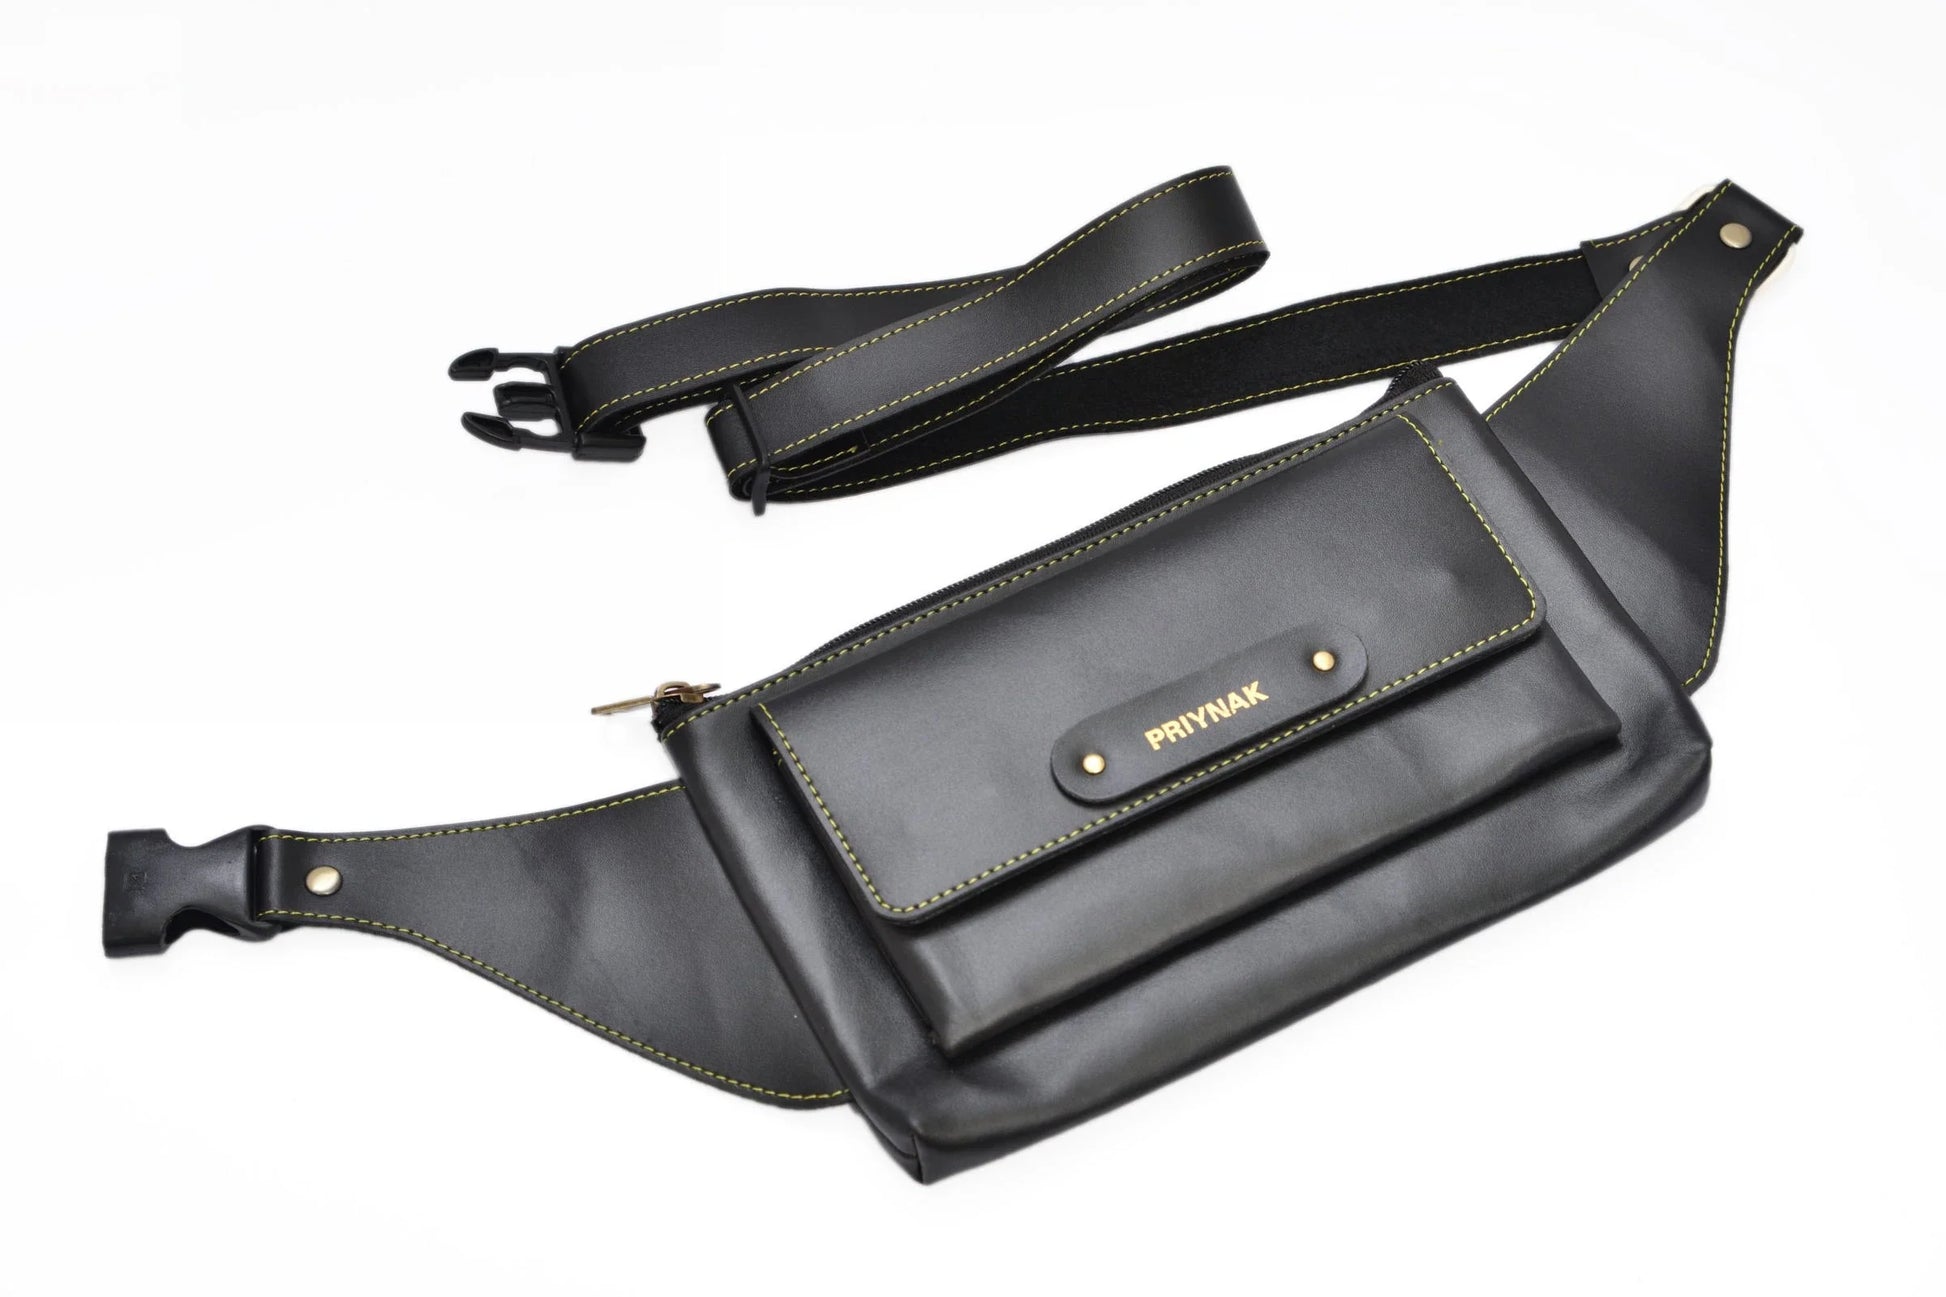 personalized-cross-bag-black-customized-best-gift-for-boyfriend-girlfriend